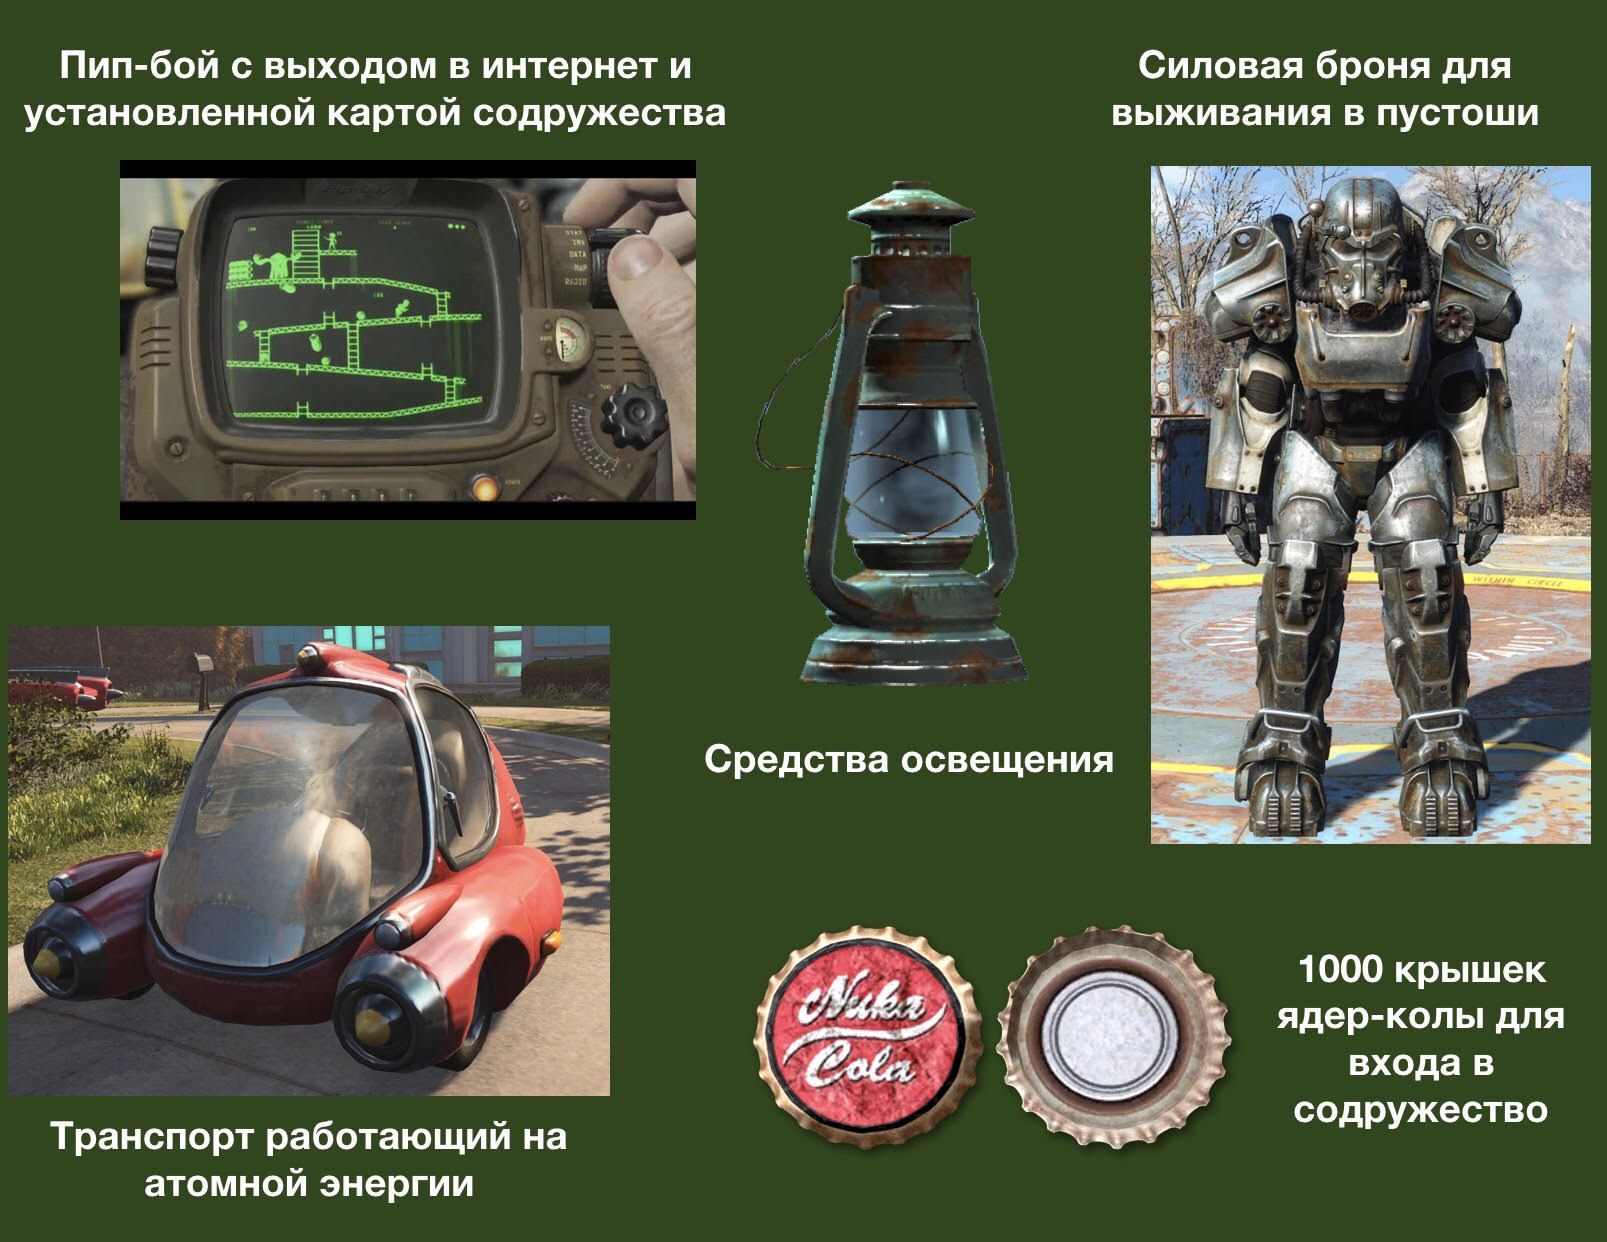 Fallout 4 руководство по выживанию в пустоши все фото 69